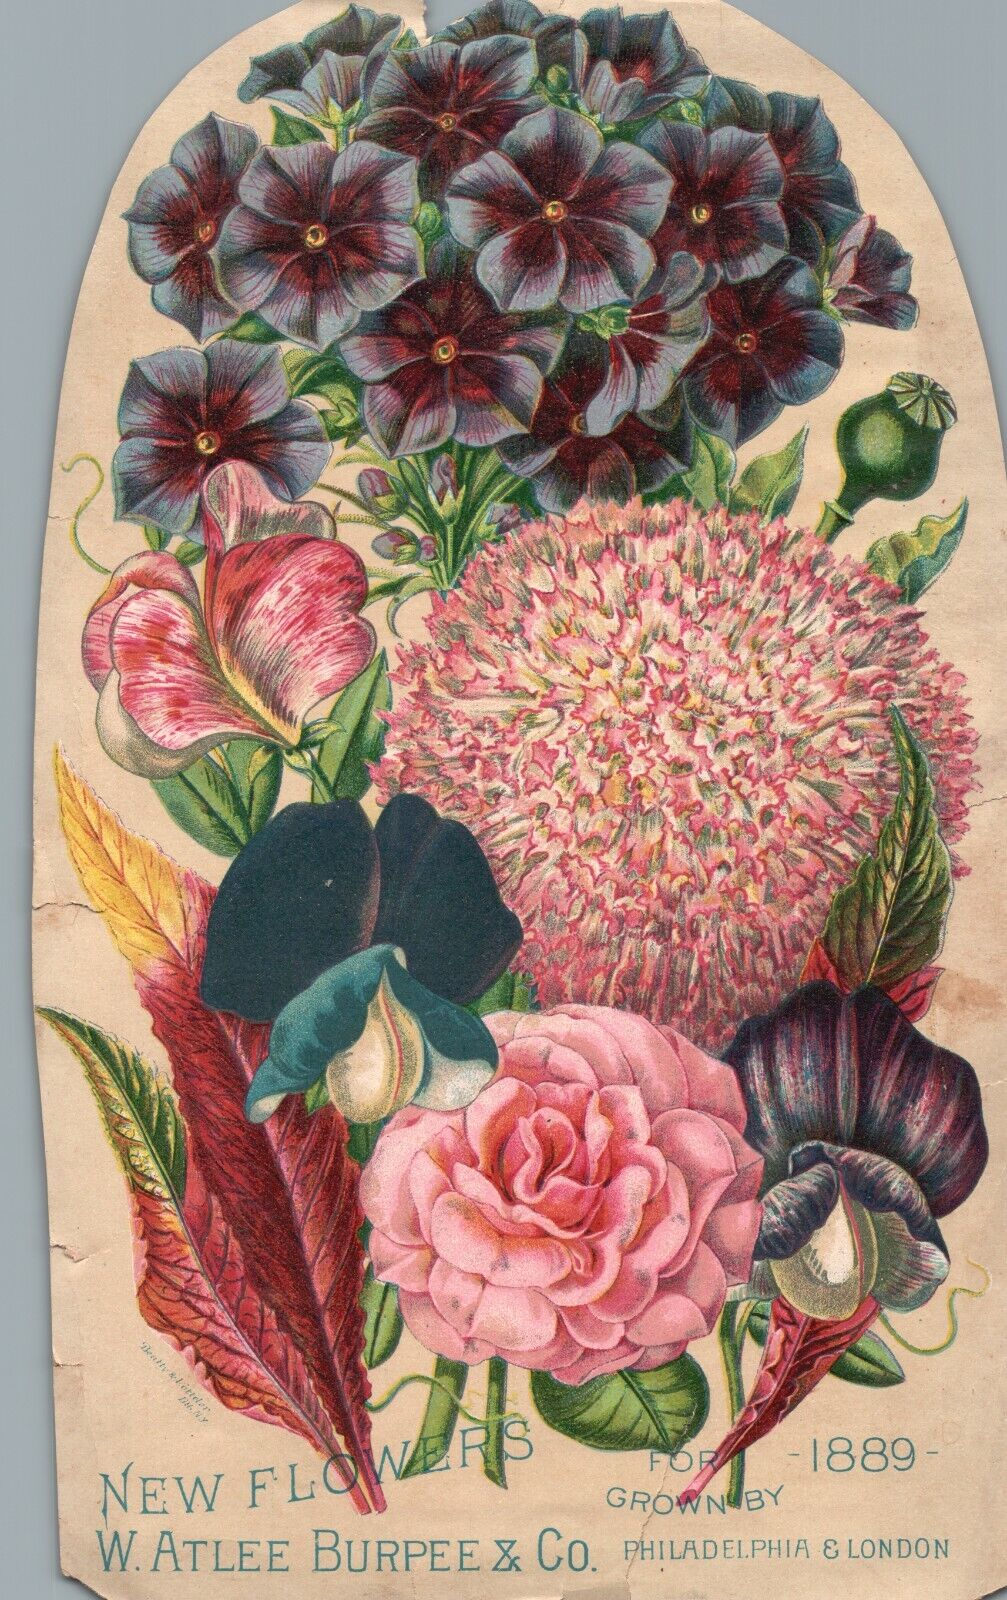 1889 New Flowers W. Atlee Burpee & Co. Philadelphia & London Trade Card